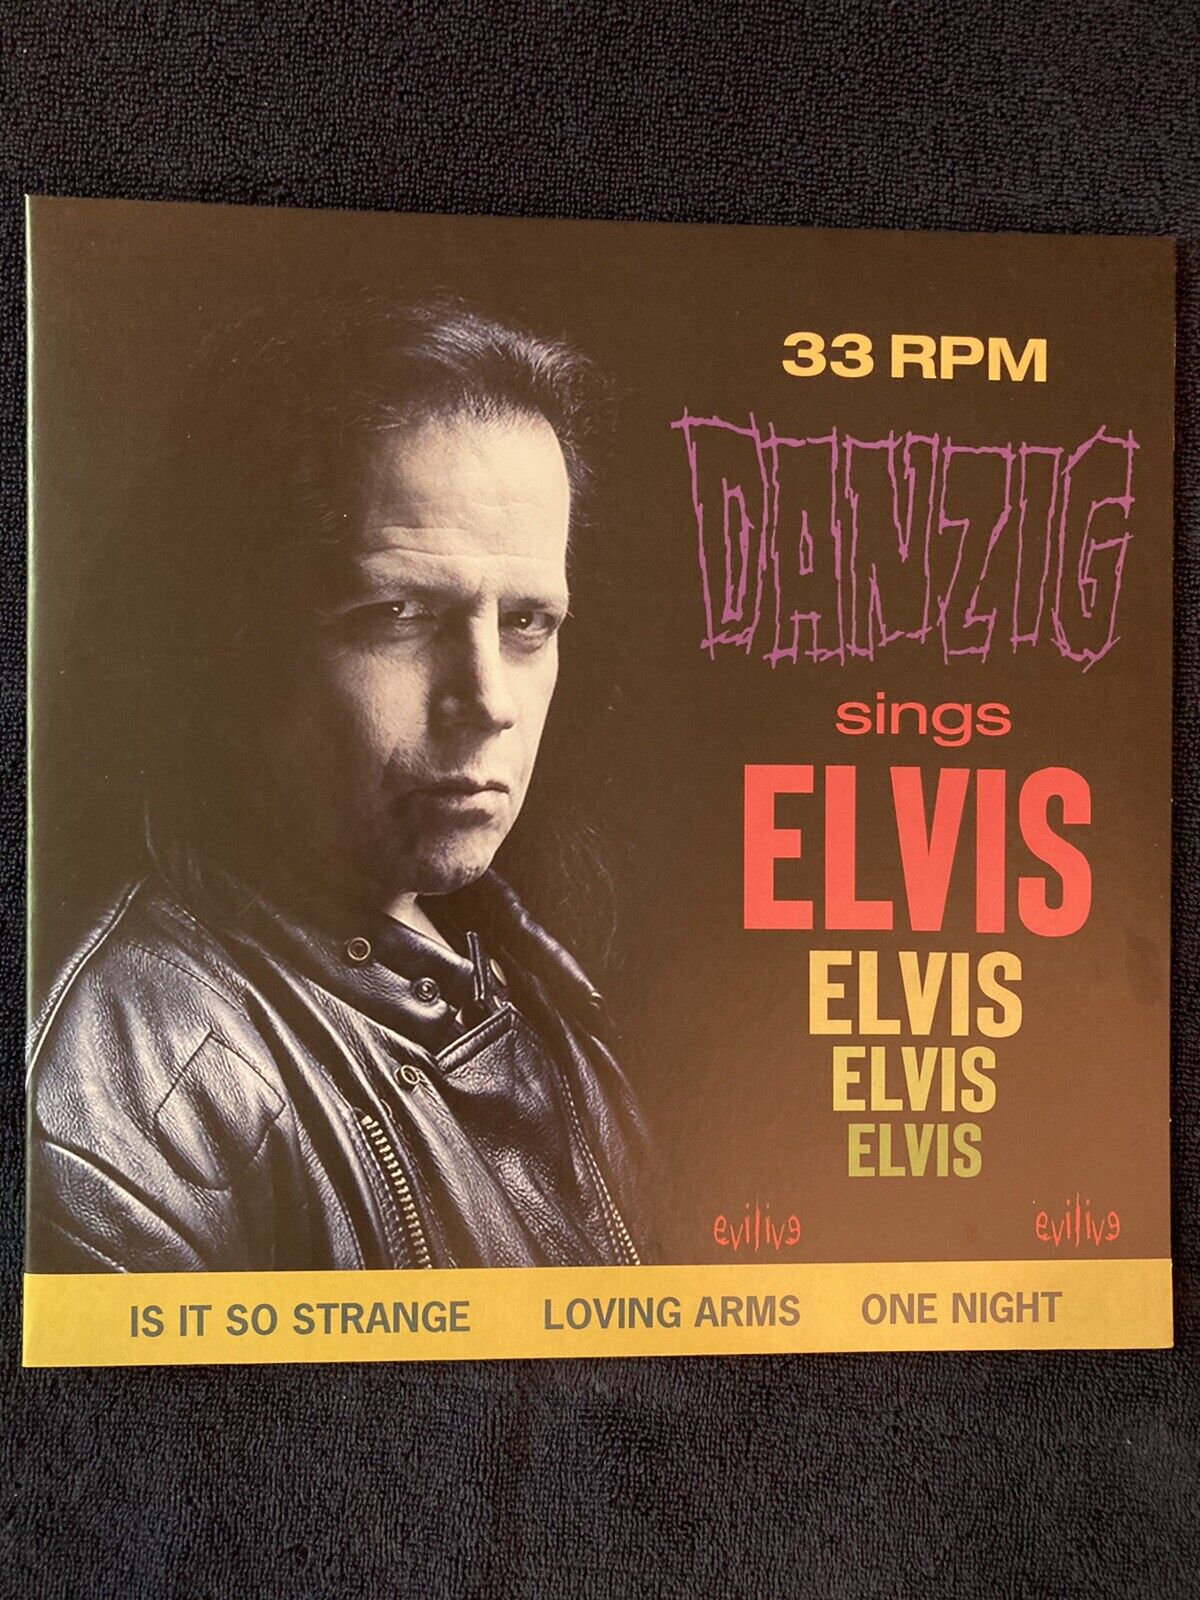 DANZIG~ Sings Elvis. 2019 Used Vinyl LP. Gatefold Cover, Near Mint Condition